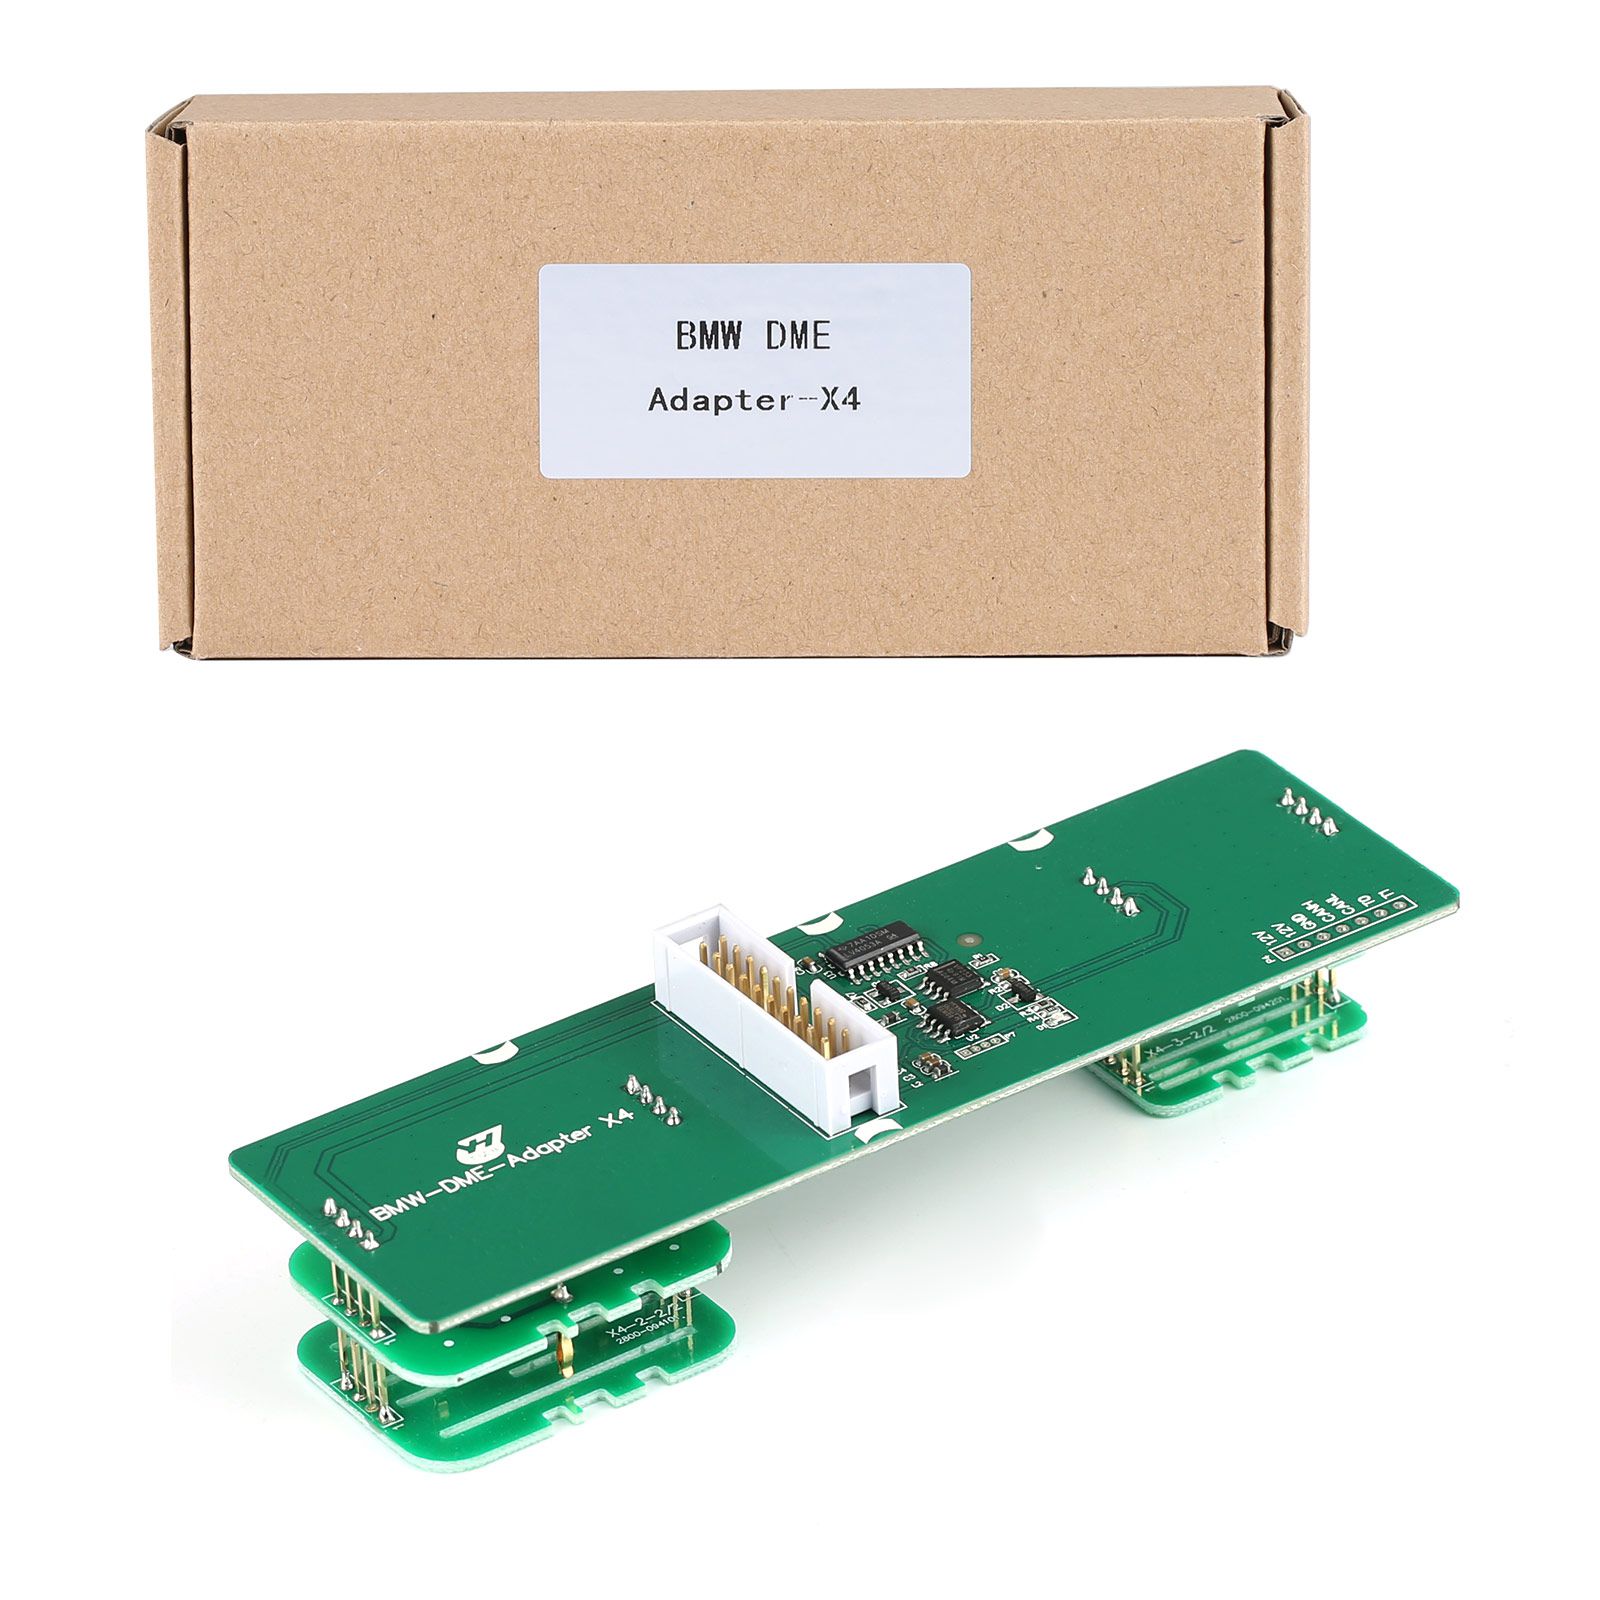 N12/N14 DME ISN 읽기/쓰기 및 클론을 위한 옌화 ACDP BMW-DME 어댑터 X4 데스크탑 인터페이스 보드